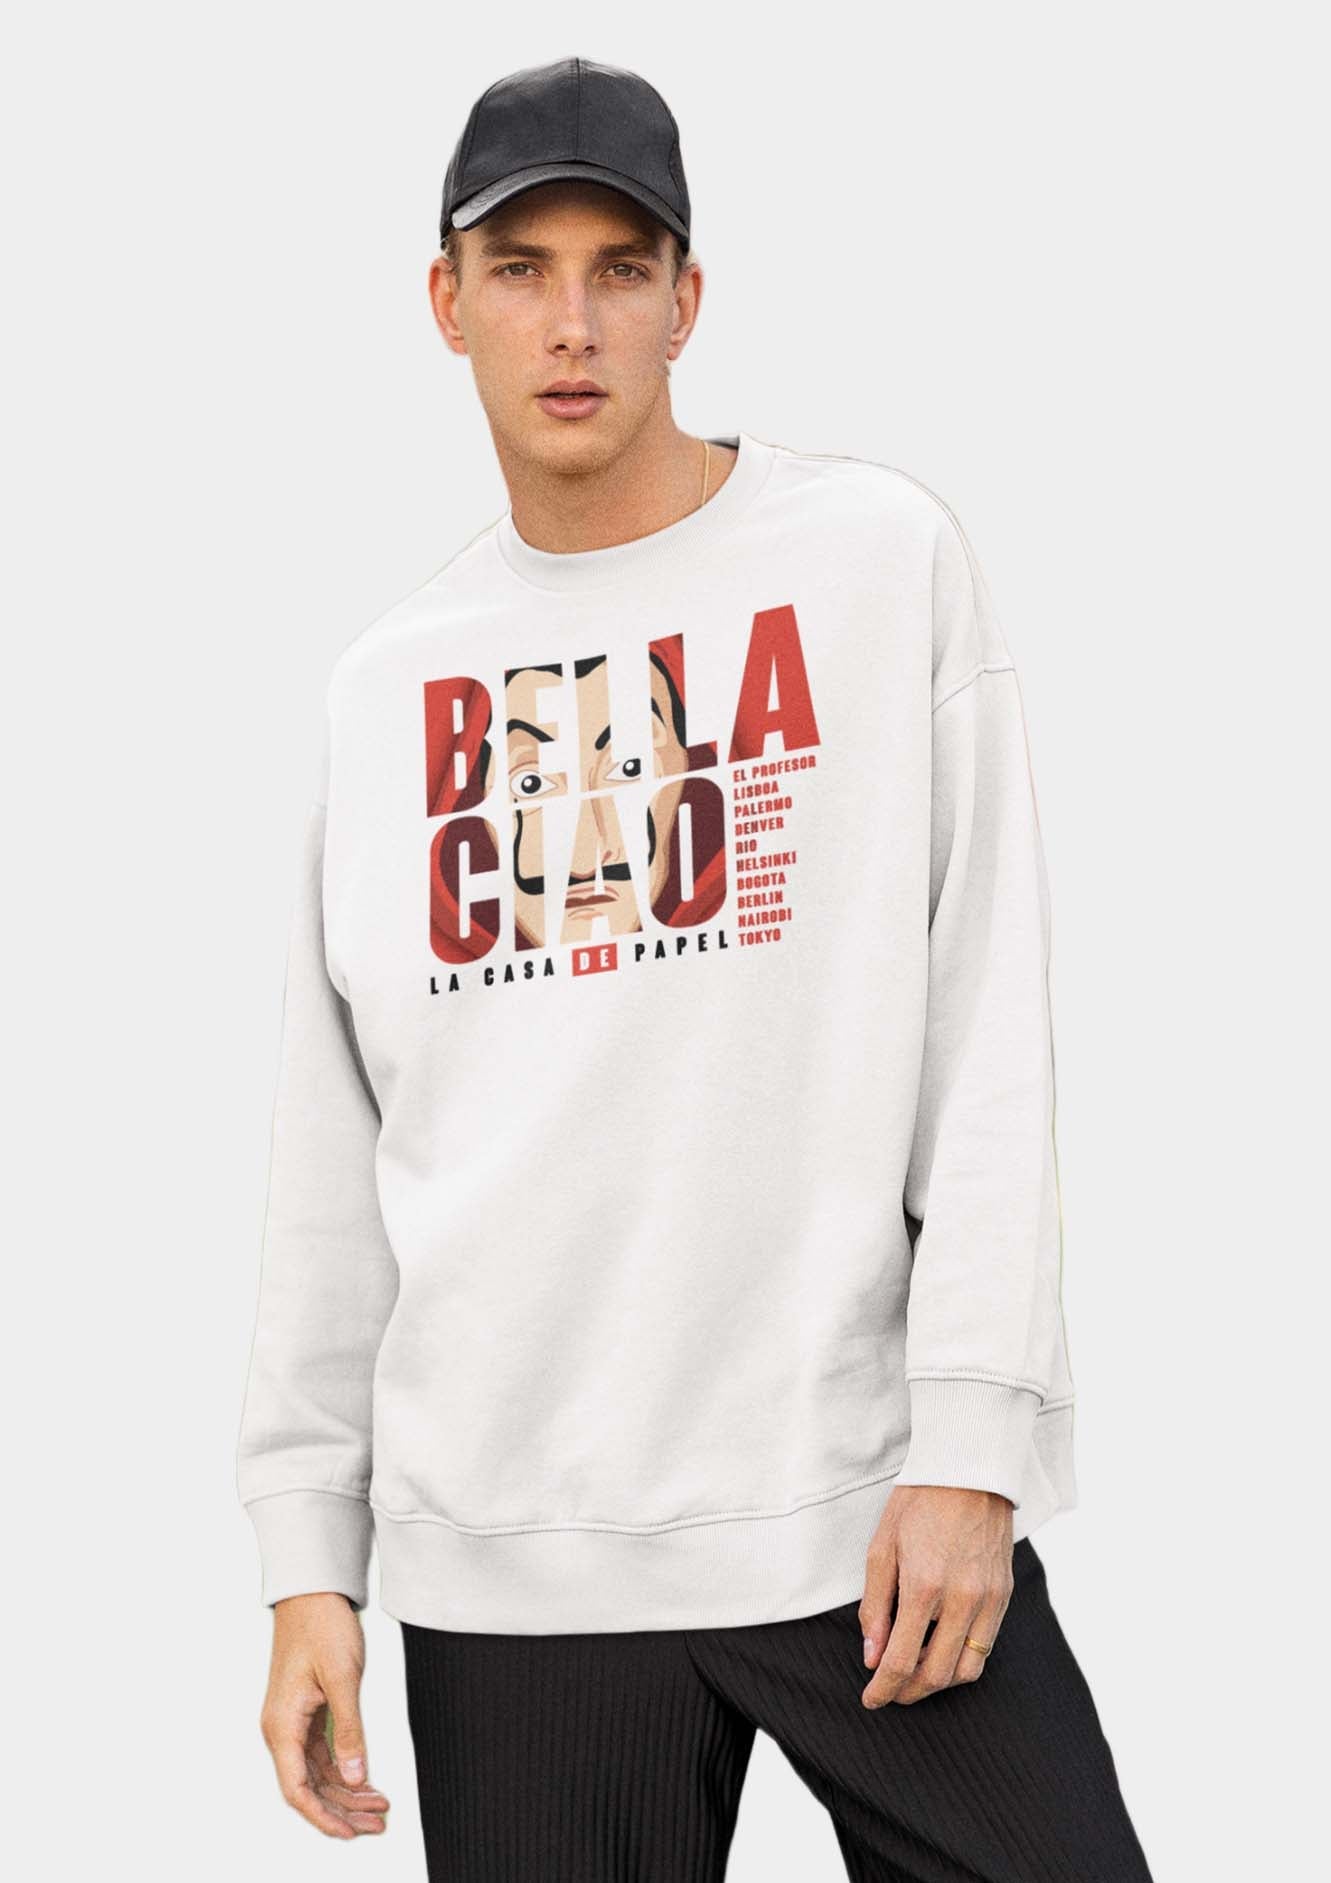 Money Heist Bella Ciao Front Unisex Sweatshirt | BFS